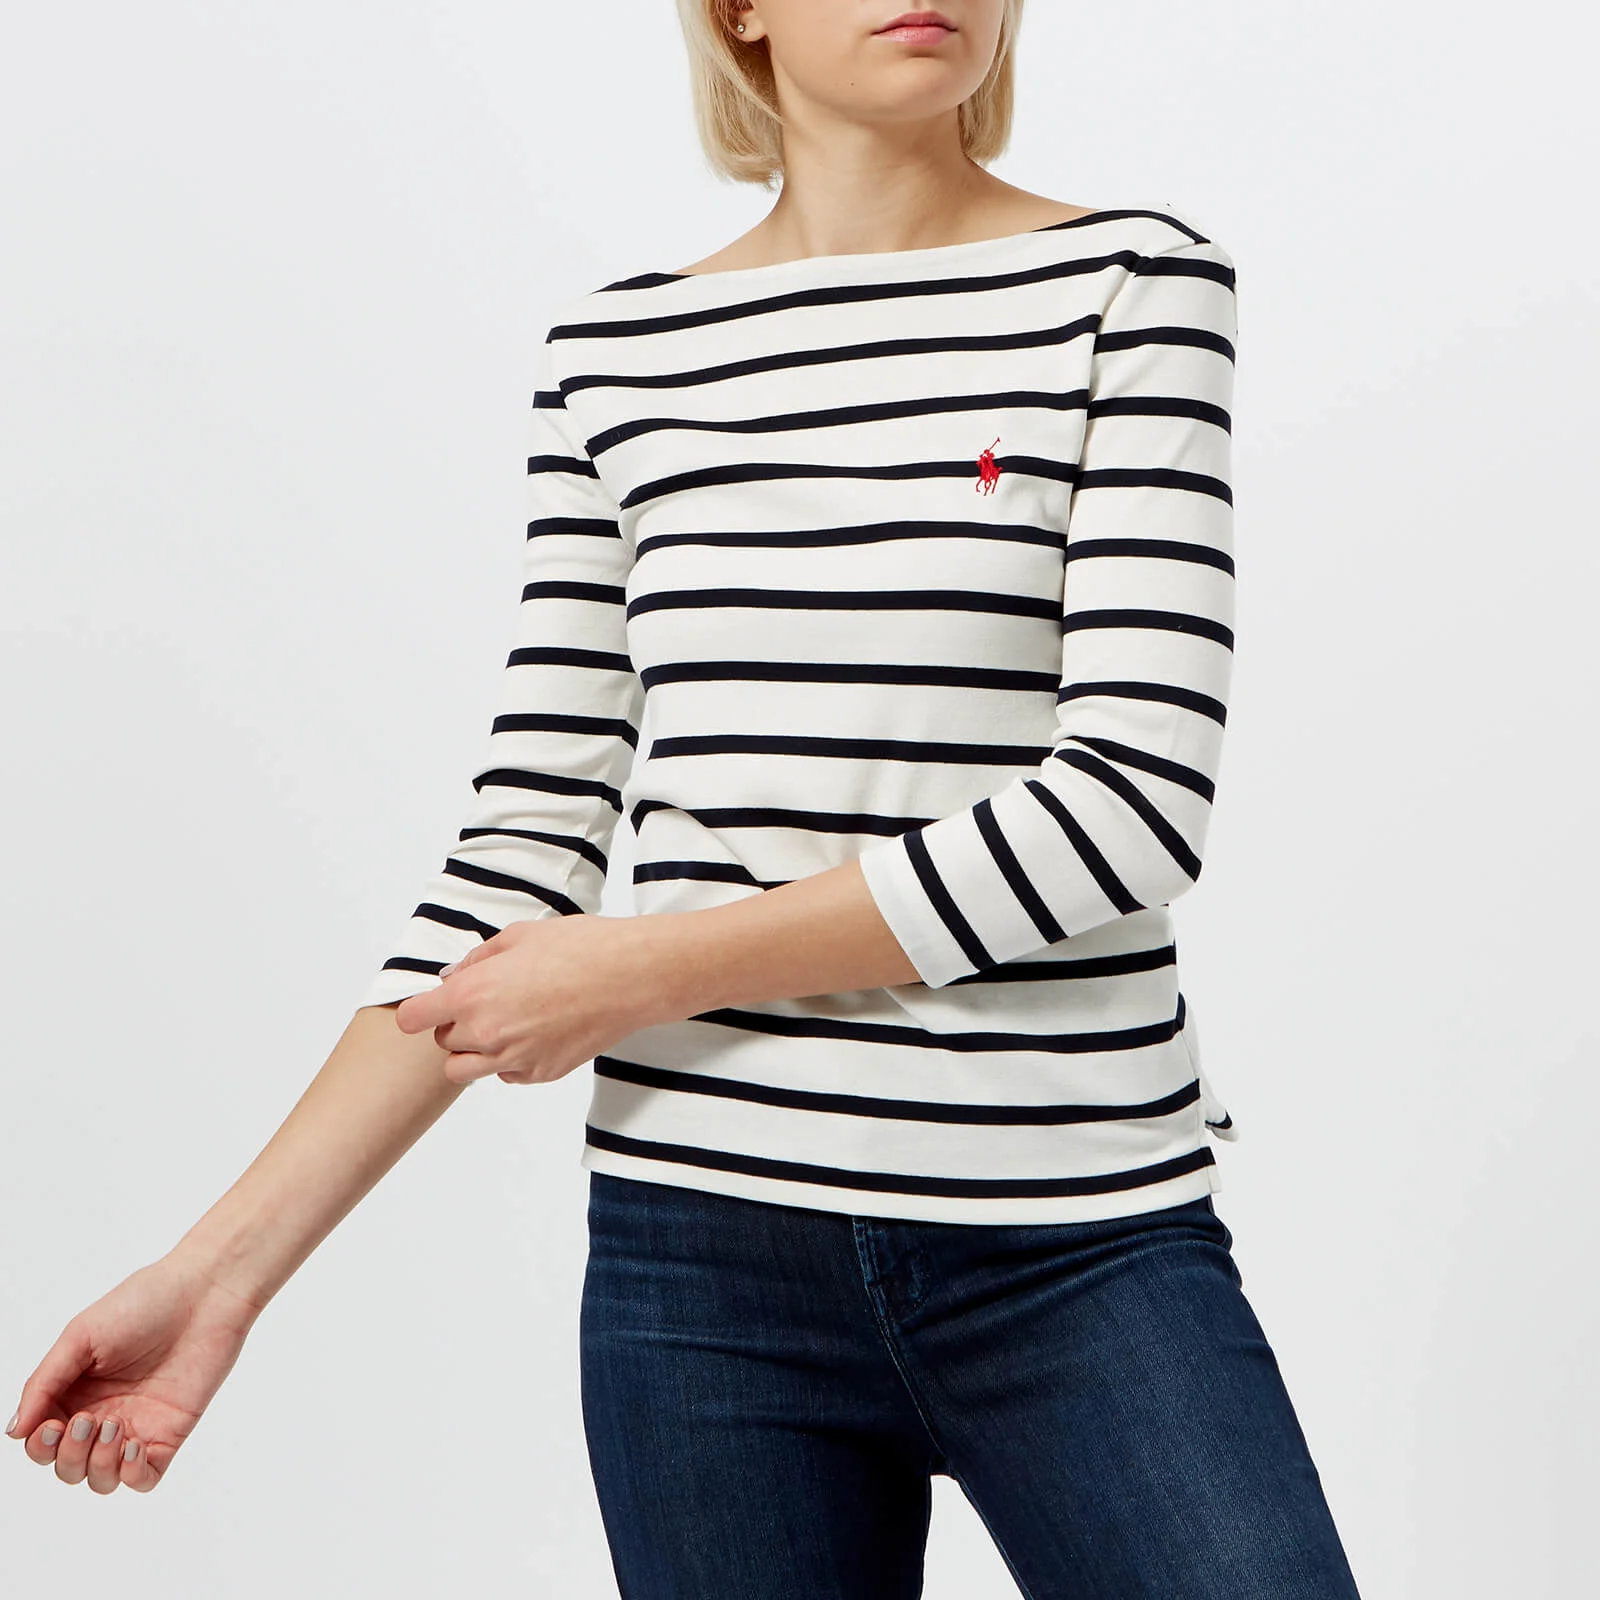 Polo Ralph Lauren Women's Striped Boat Neck T-Shirt - White/Navy Image 1